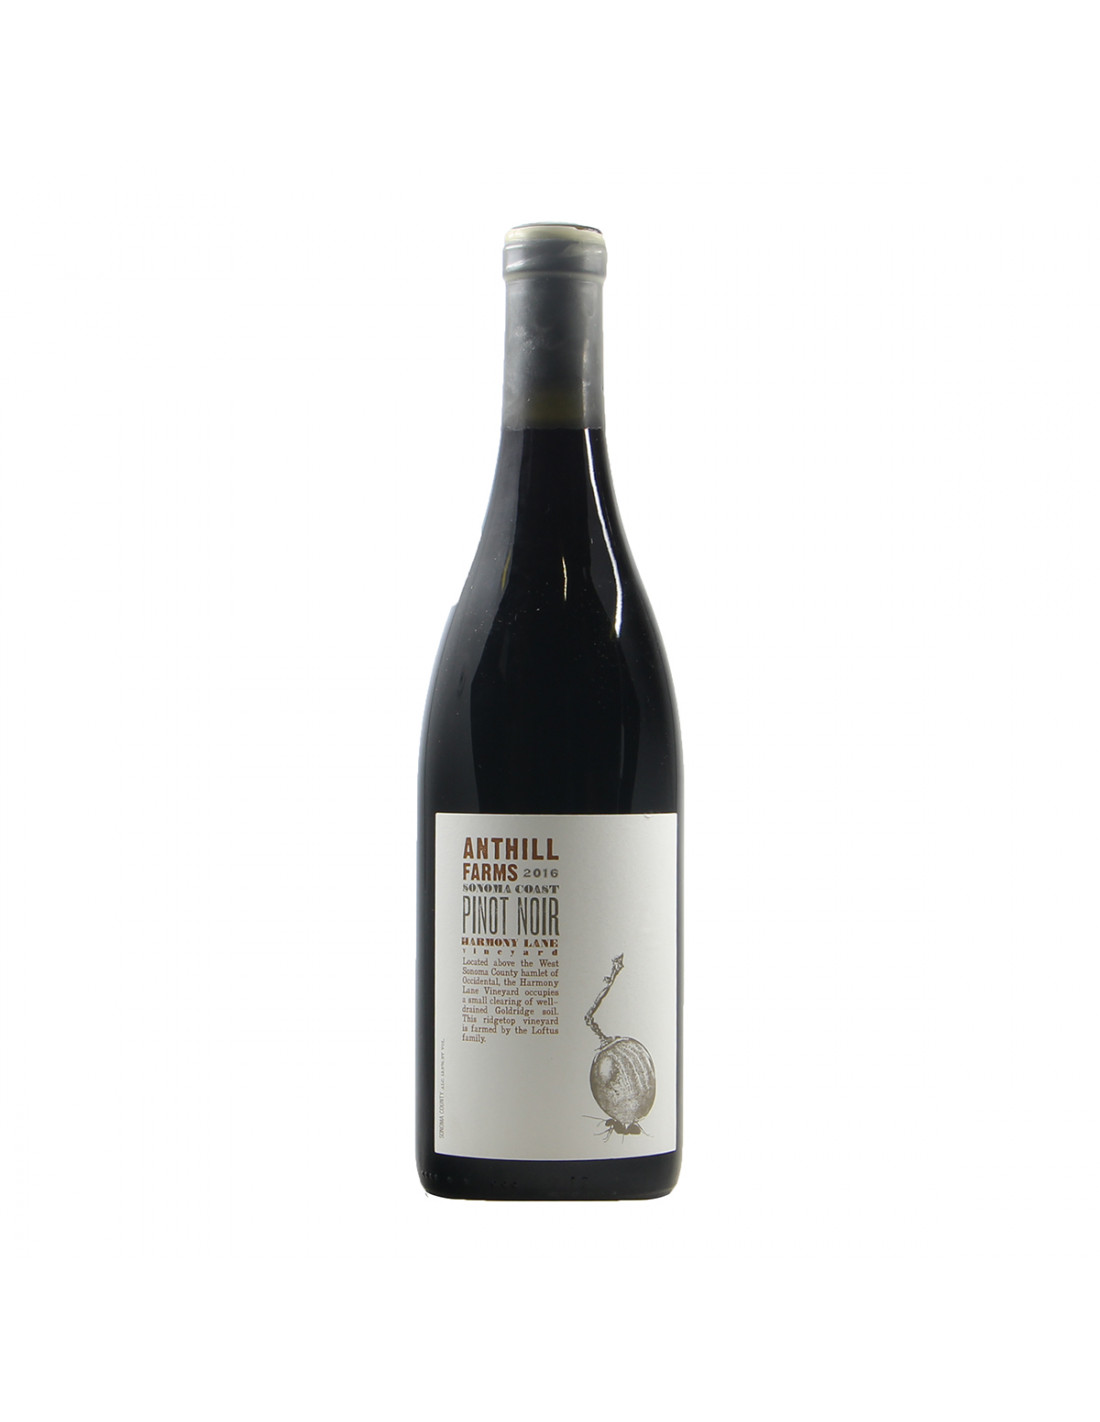 Anthill Farms Pinot Noir Harmony Lane Vineyard 2016 Grandi Bottiglie